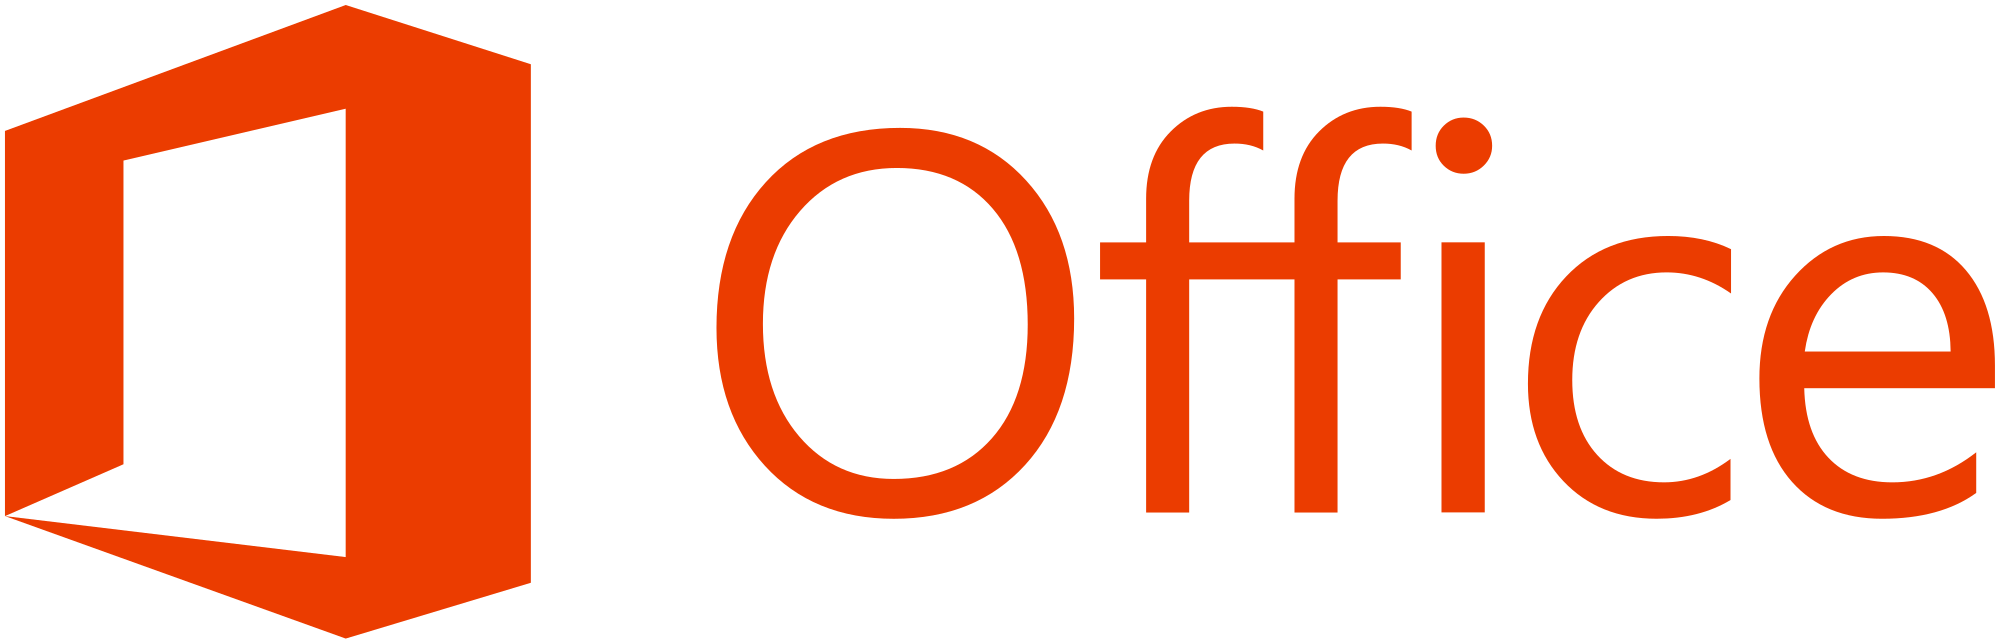 Microsoft Office 2016 Logo - File:Microsoft Office 2013 logo and wordmark.svg - Wikimedia Commons